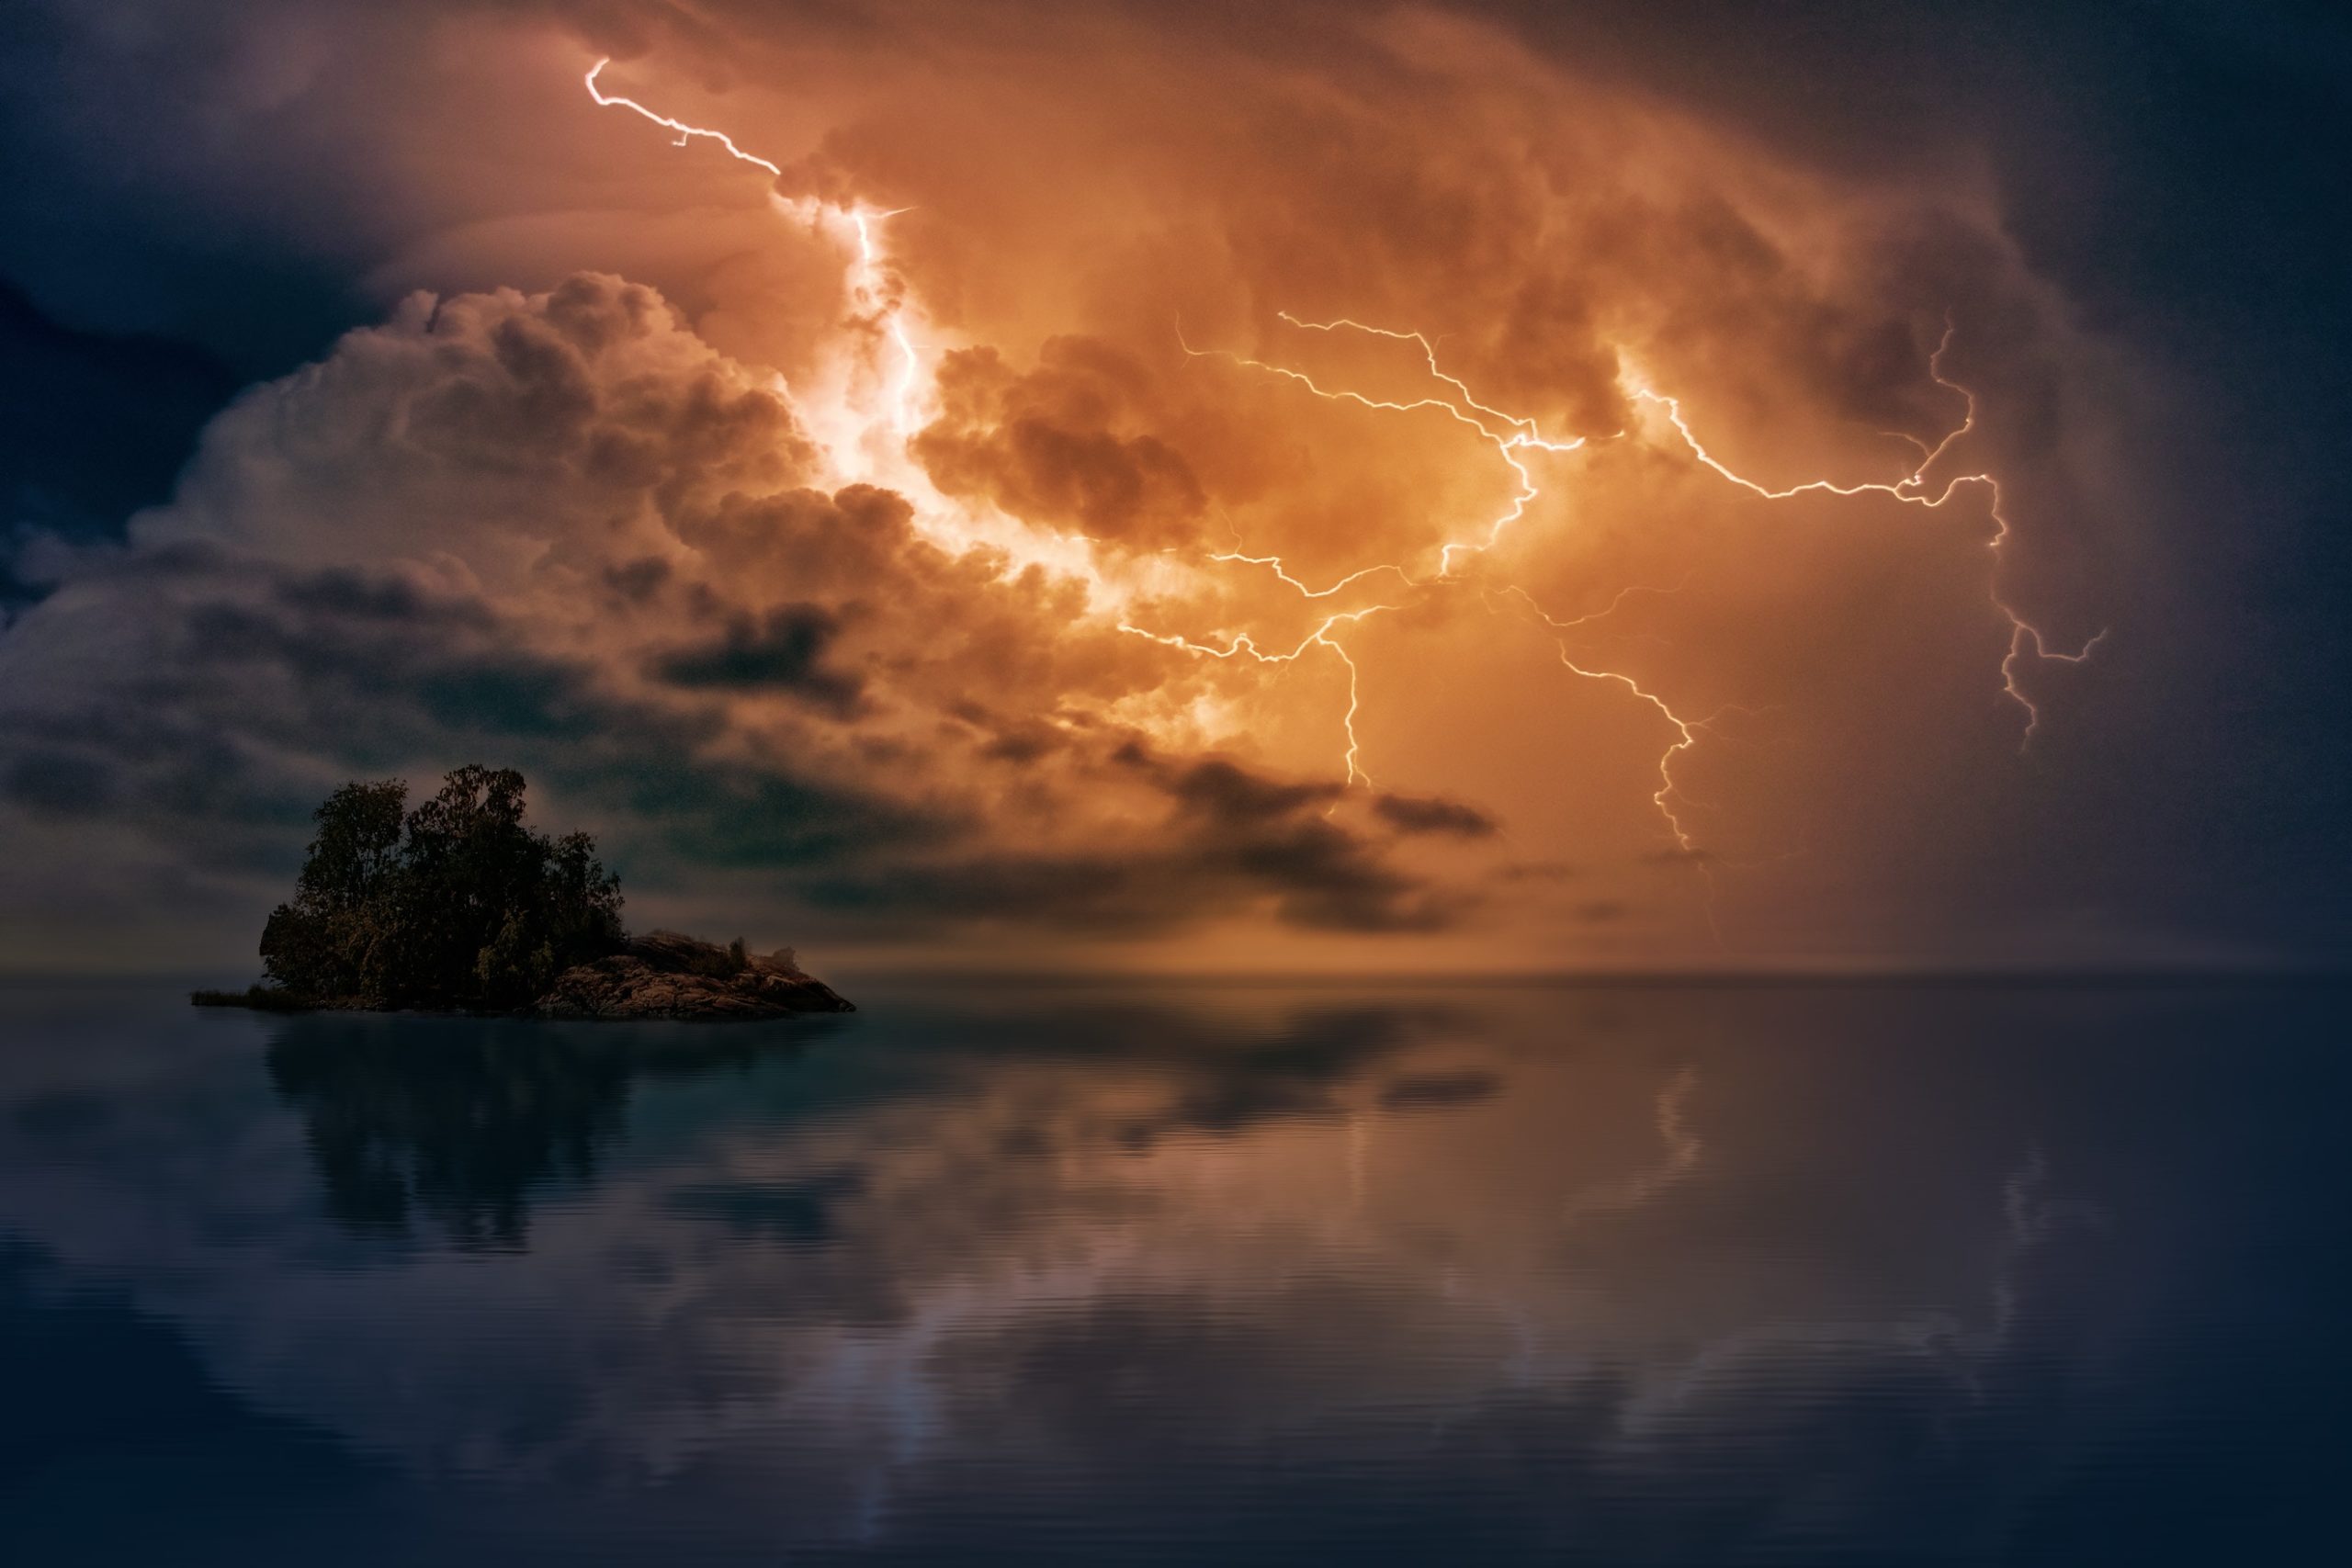 thunderstorm above water near an island